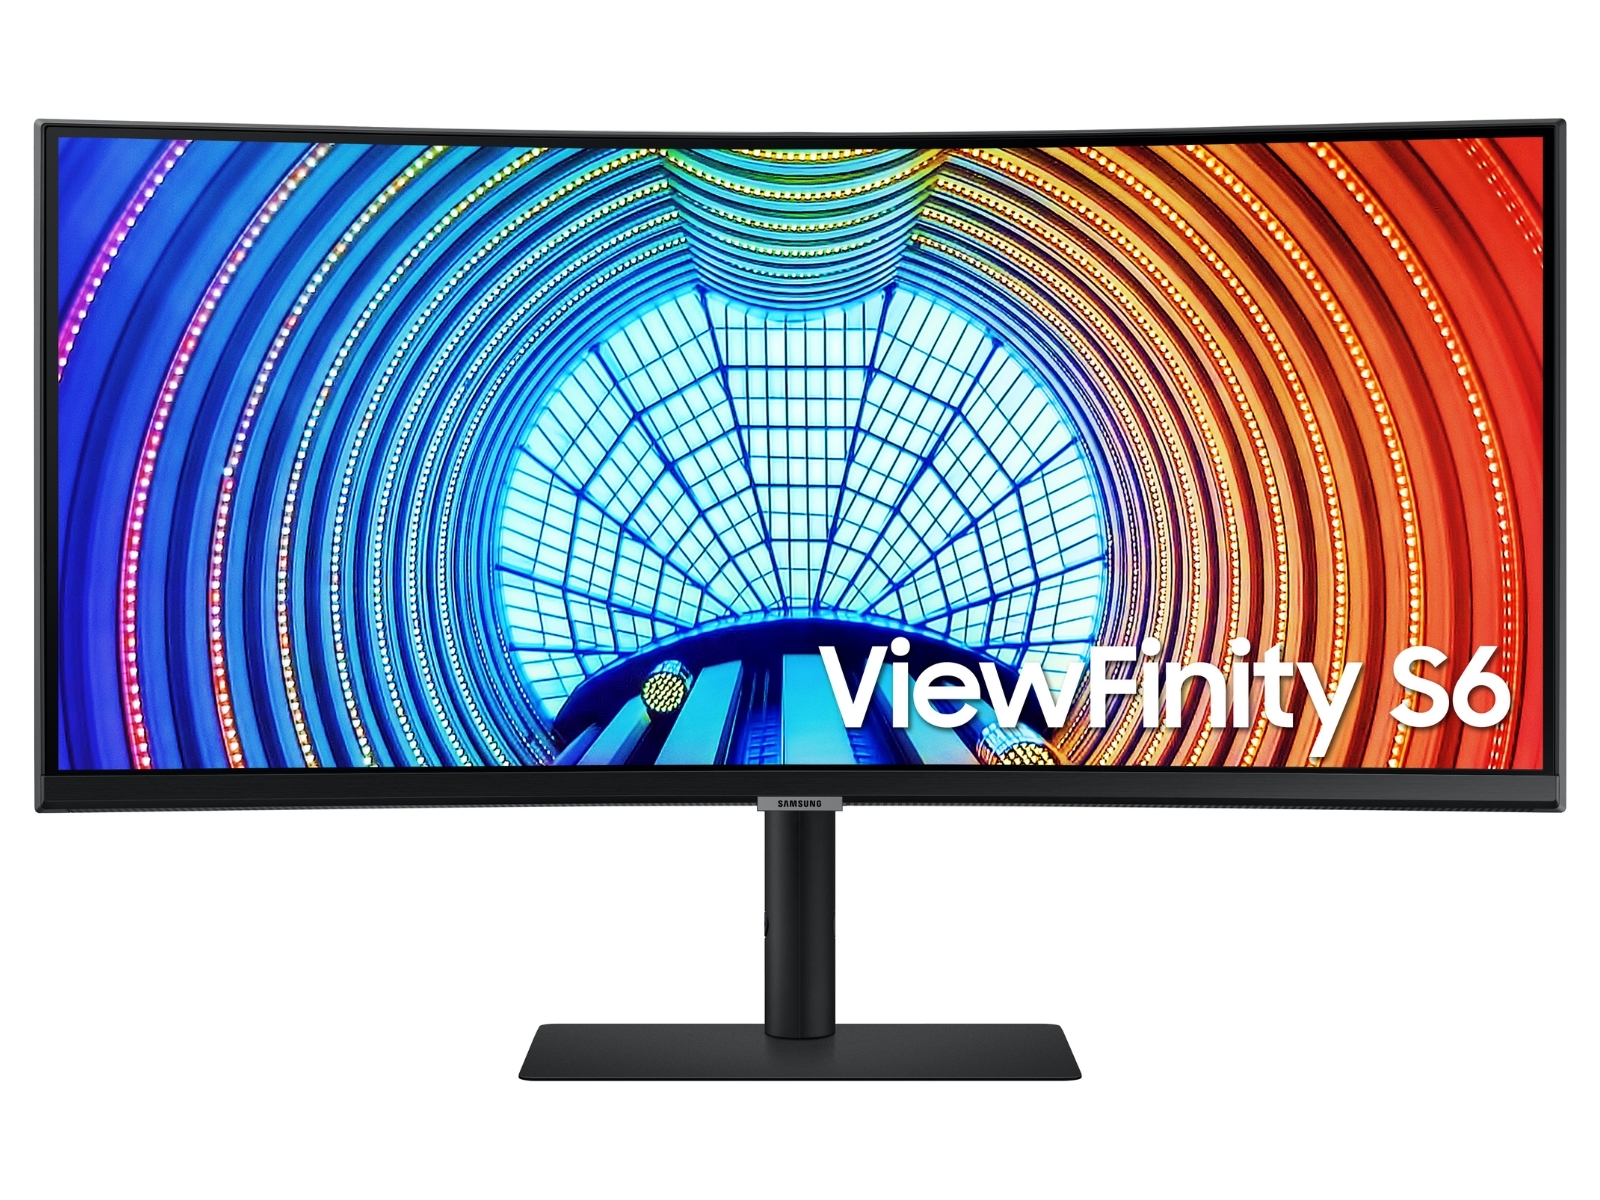 34” ViewFinity Ultra WQHD High Resolution Monitor with 1000R